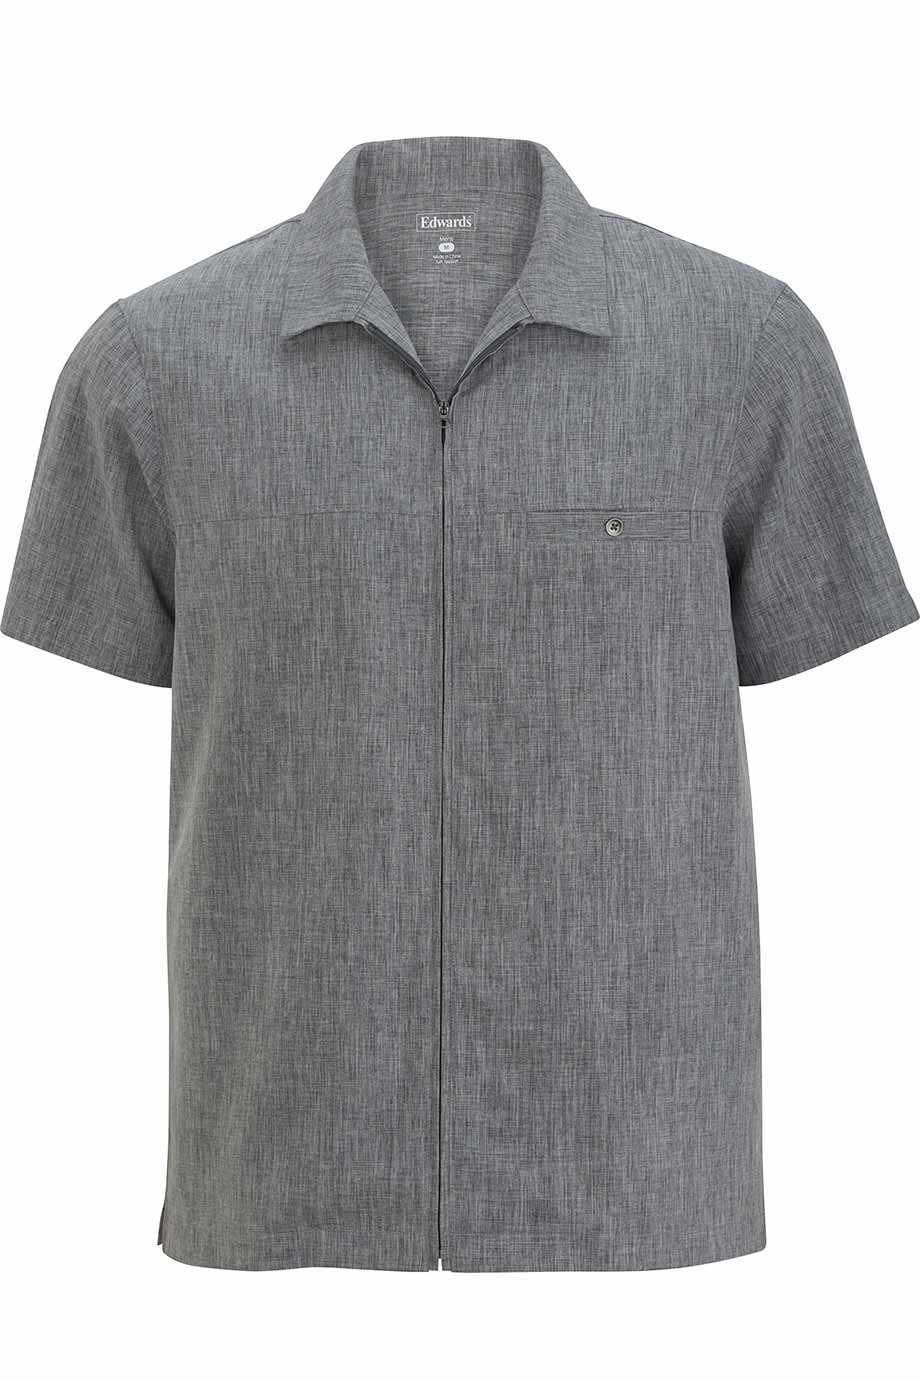 Edwards Men'S V-Neck Zip Service Shirt 4281